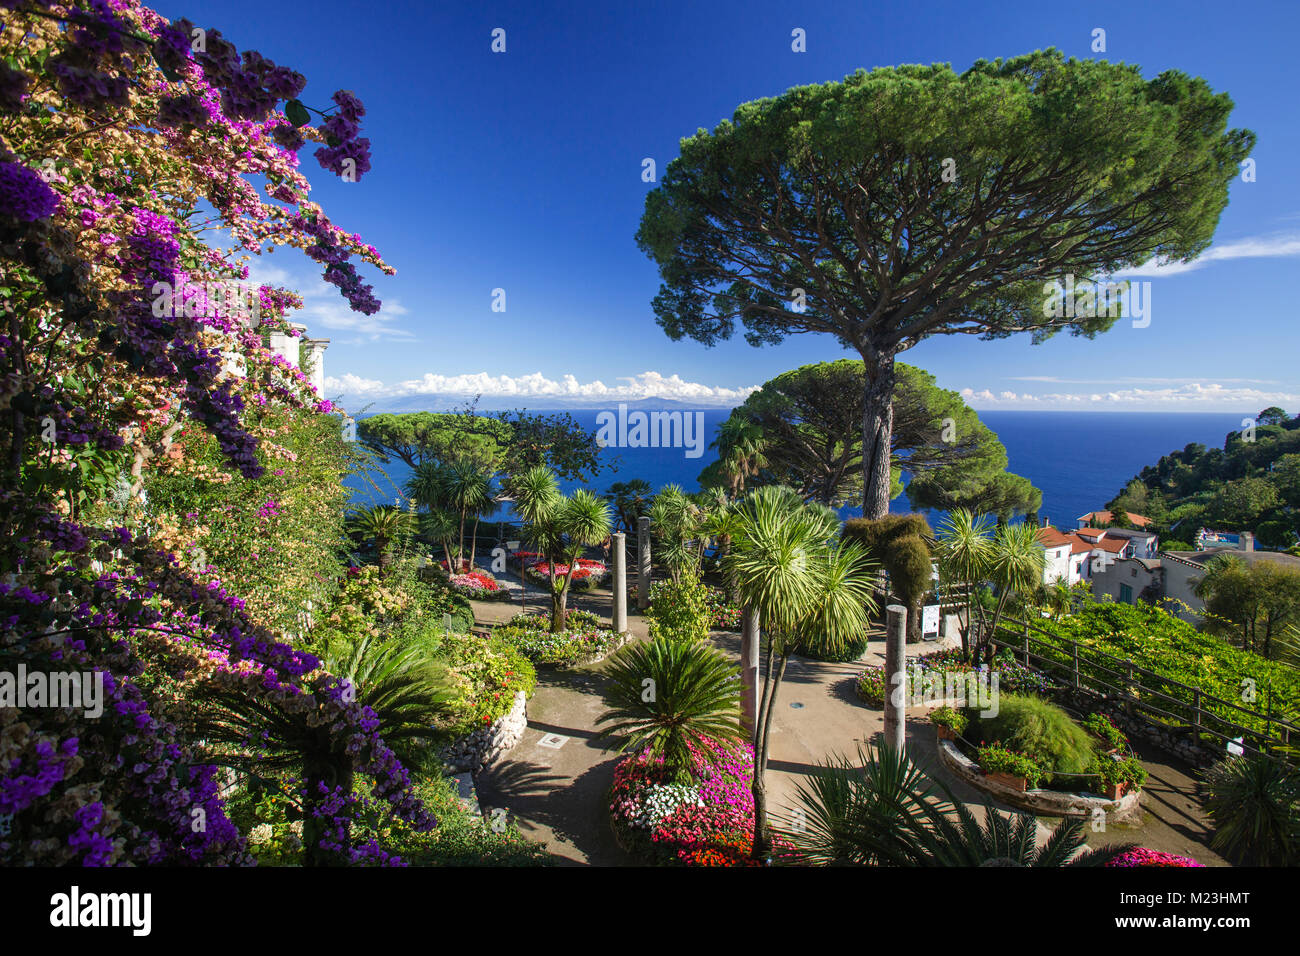 Villa Rufolo and Gardens in Ravello, Amalfi Coast, Italy Stock Photo